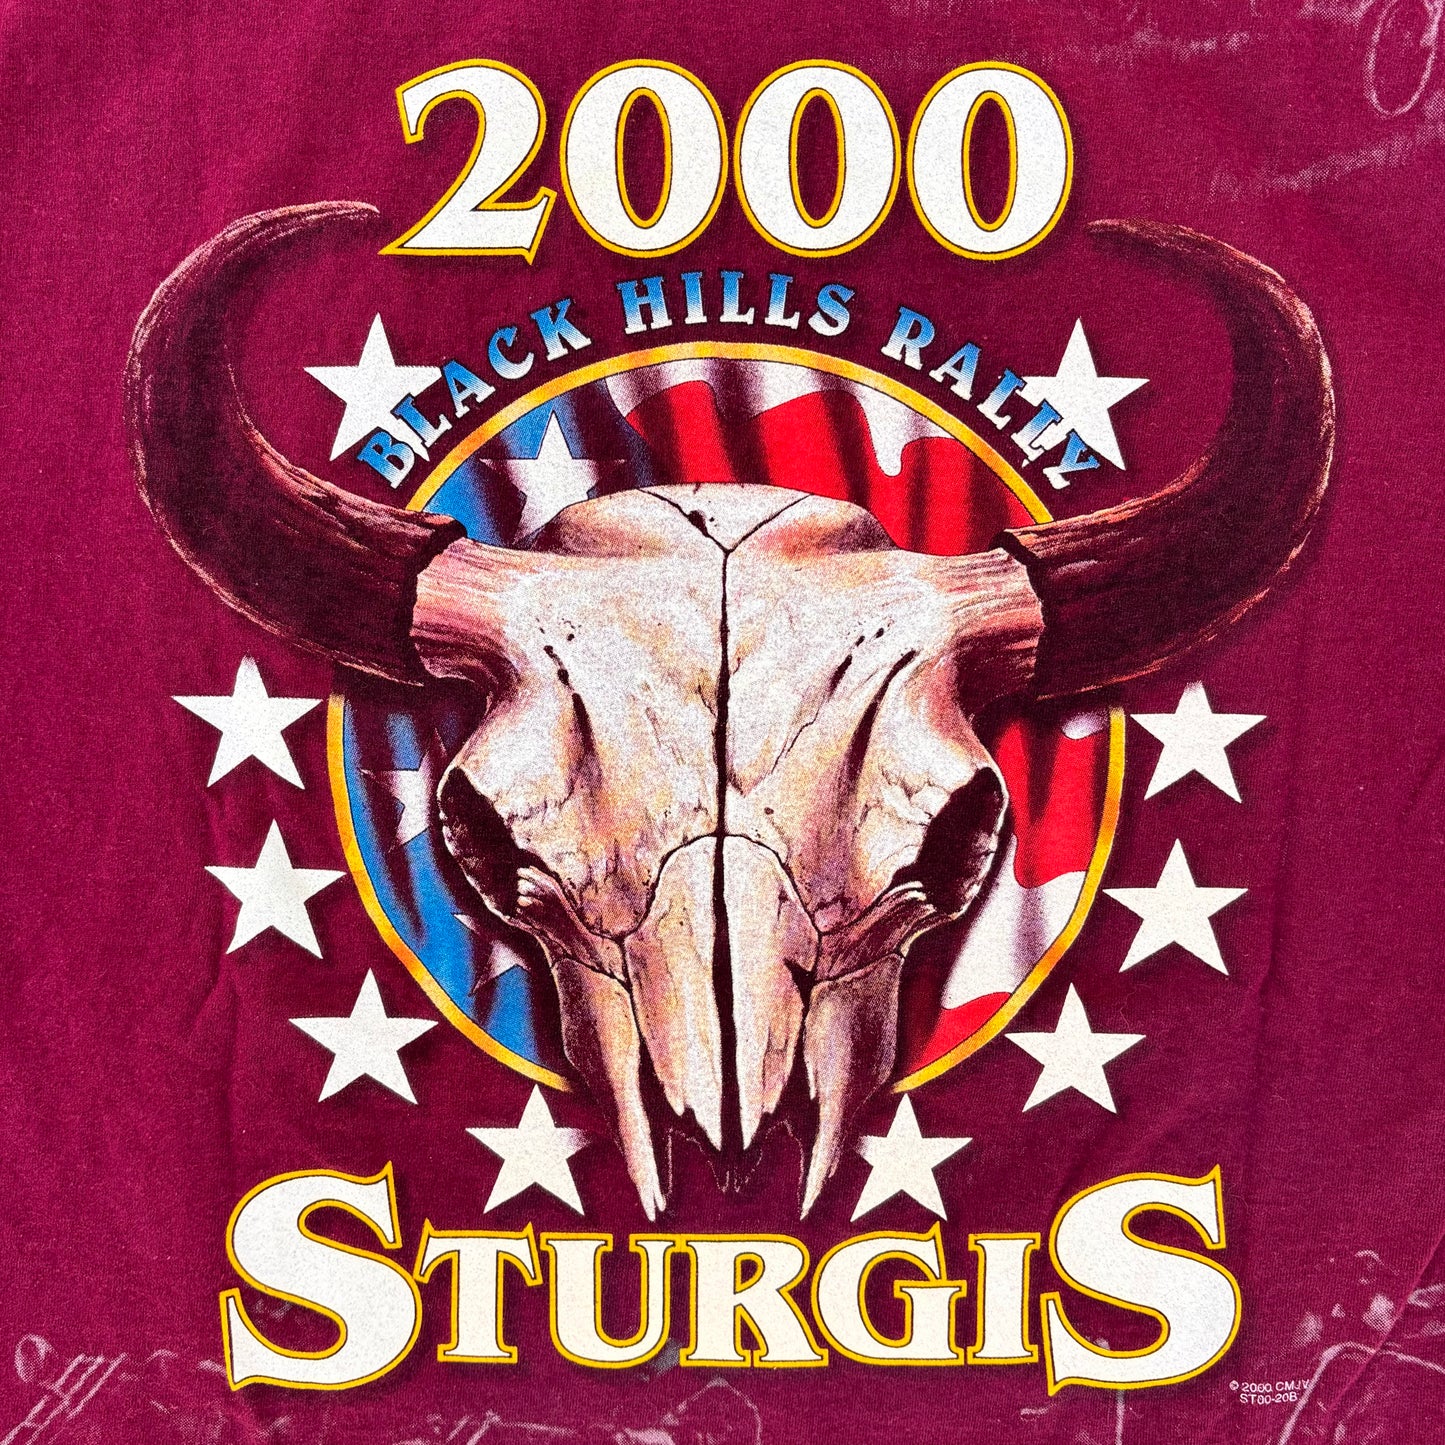 2000’s Sturgis T-Shirt